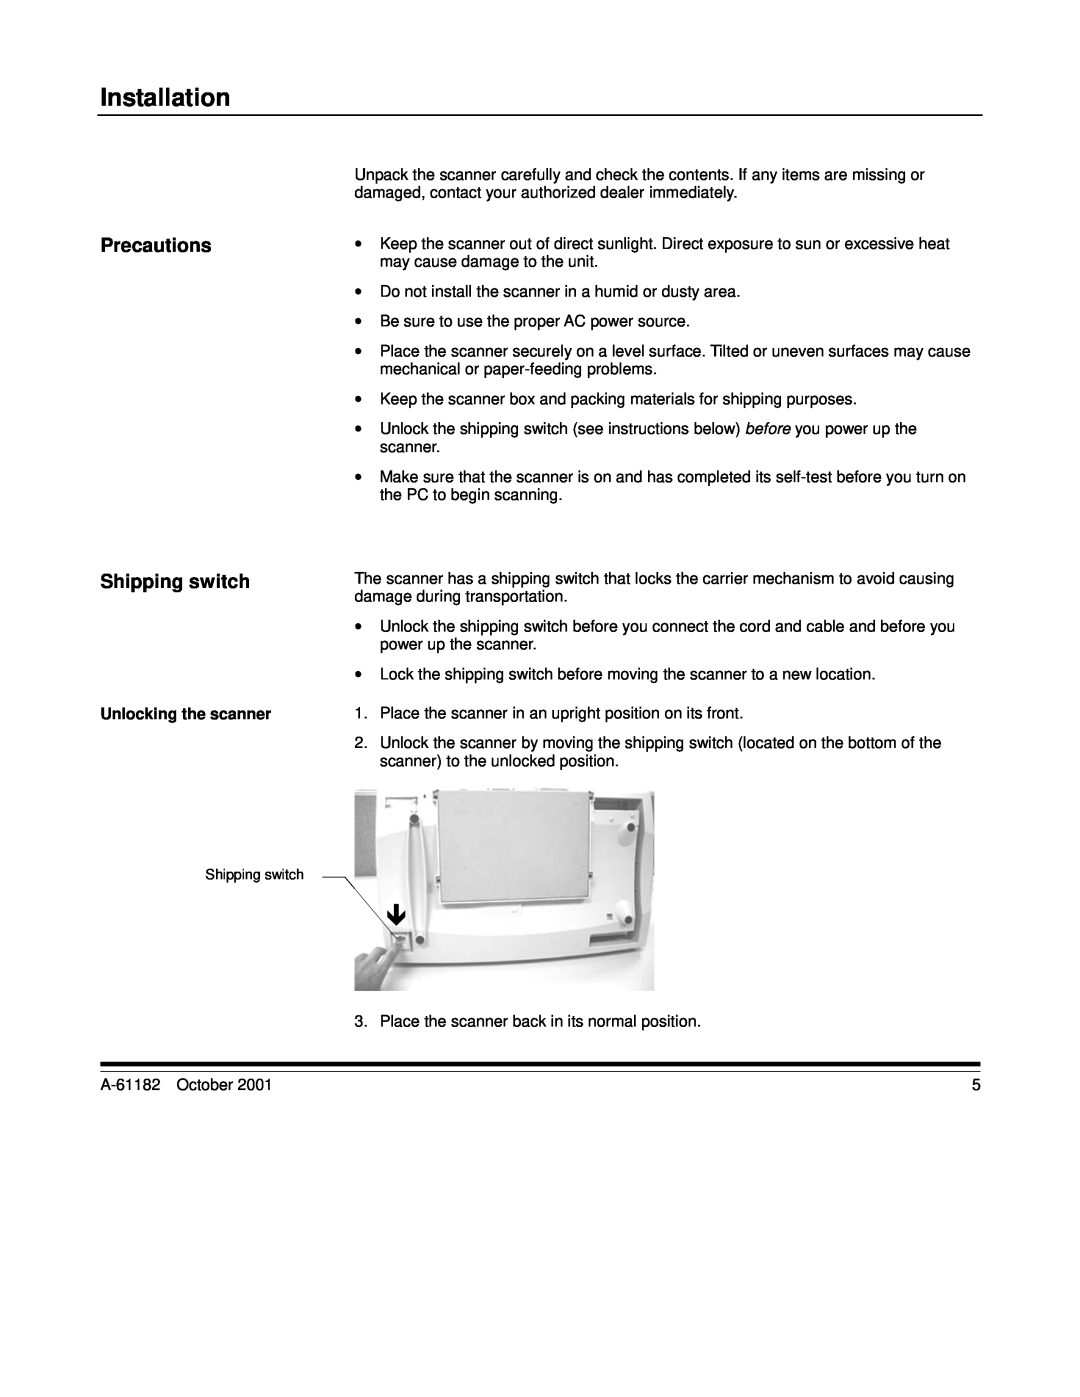 Kodak i60, i50 manual Installation, Precautions, Shipping switch 